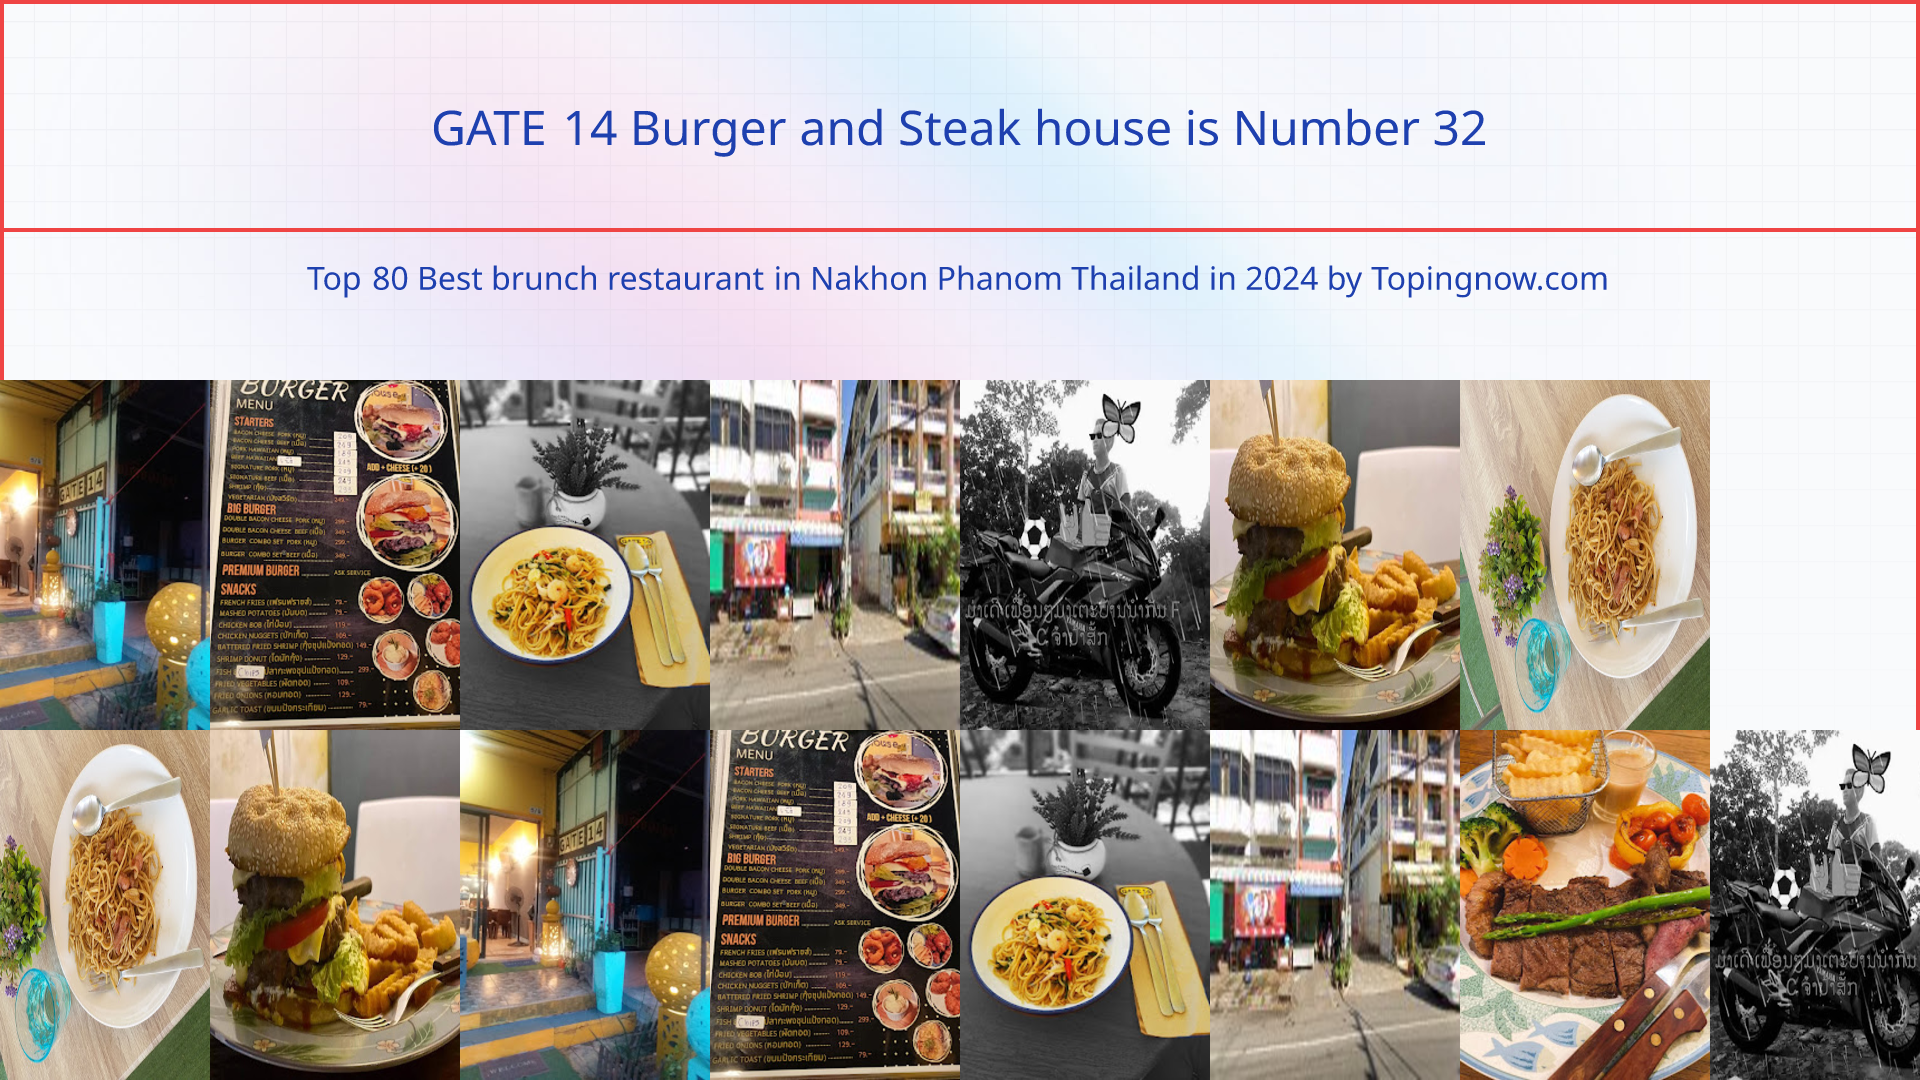 GATE 14 Burger and Steak house: Top 80 Best brunch restaurant in Nakhon Phanom Thailand in 2024